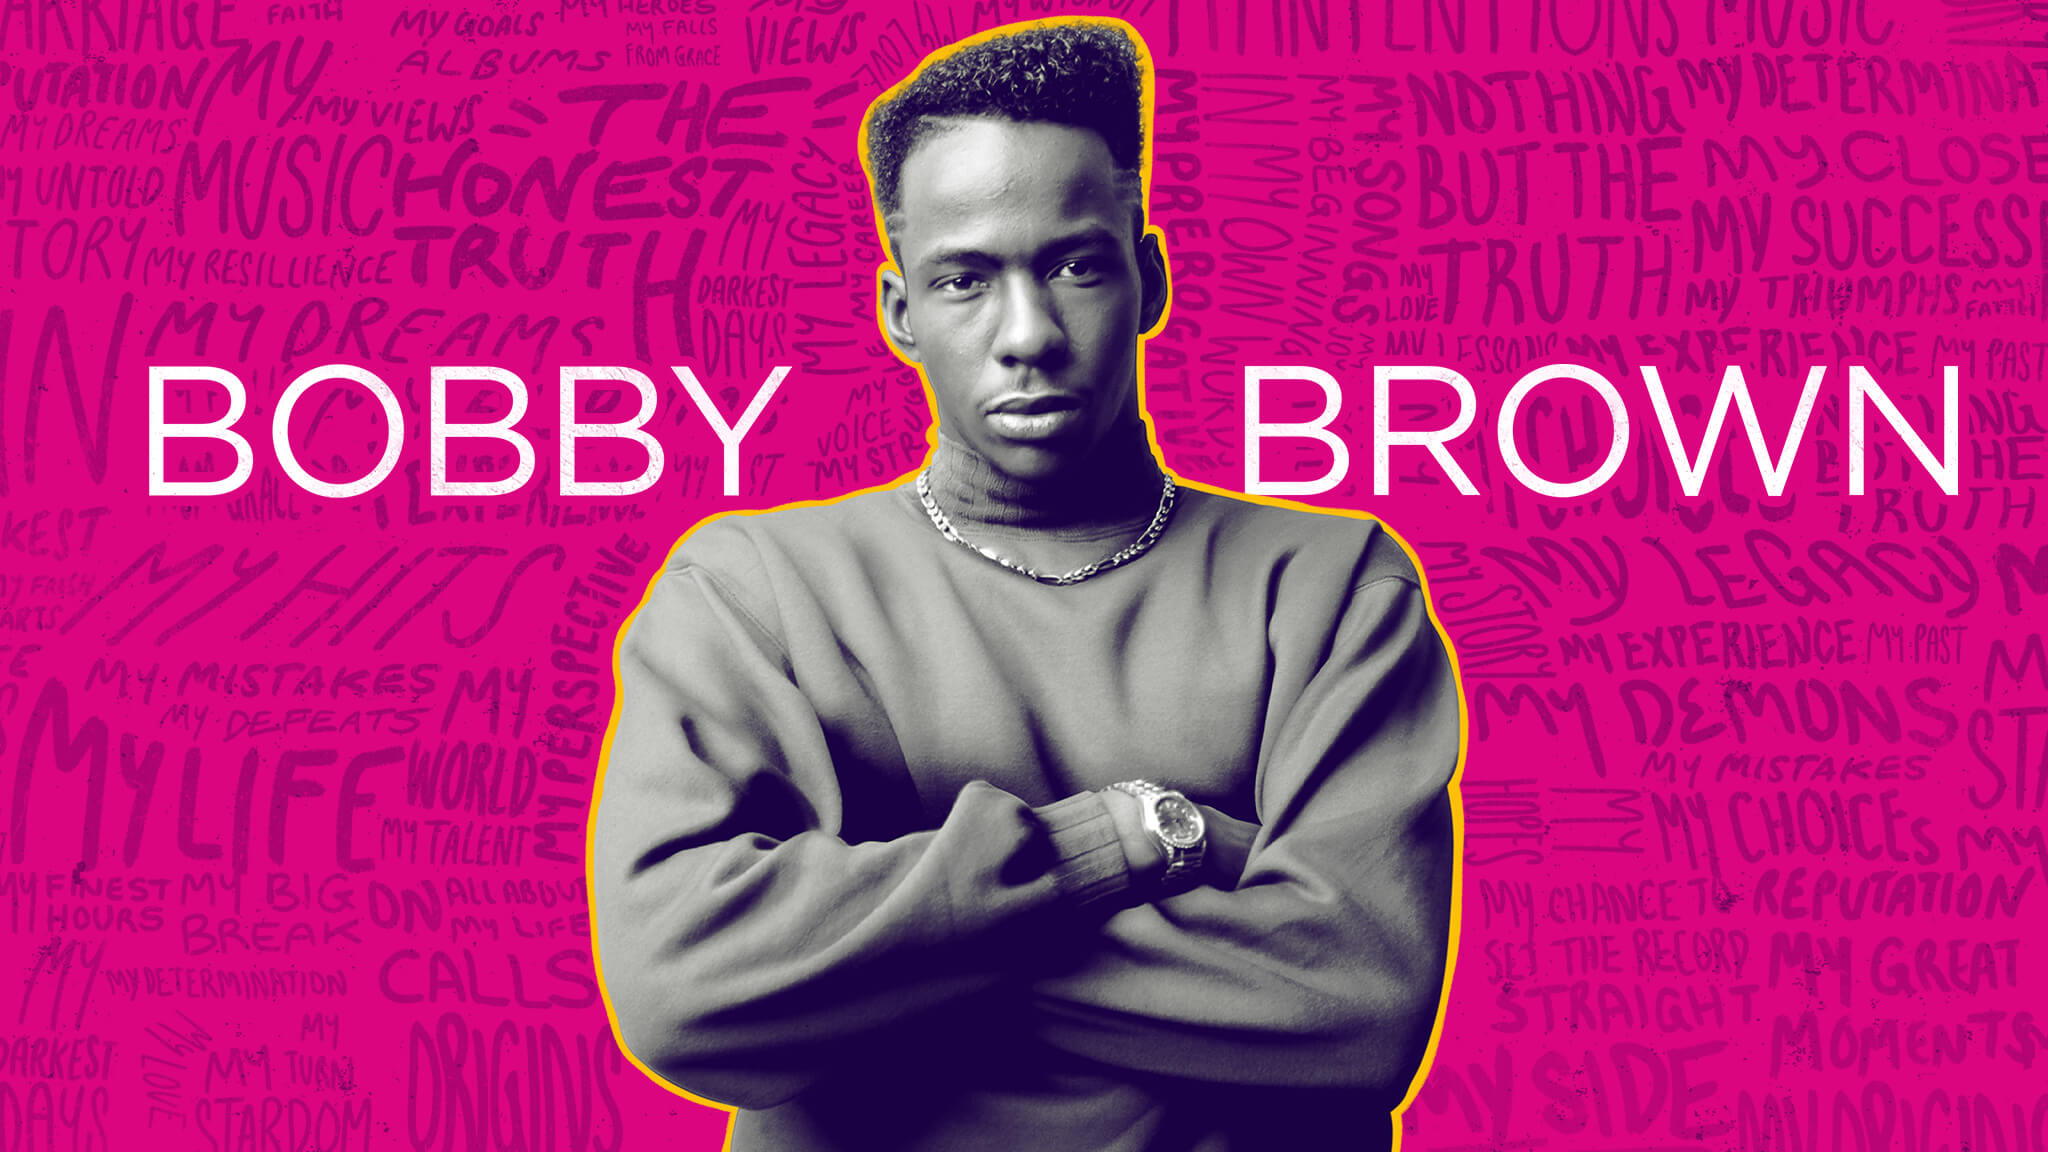 Reel Bobby Brown in “Biography Bobby Brown”